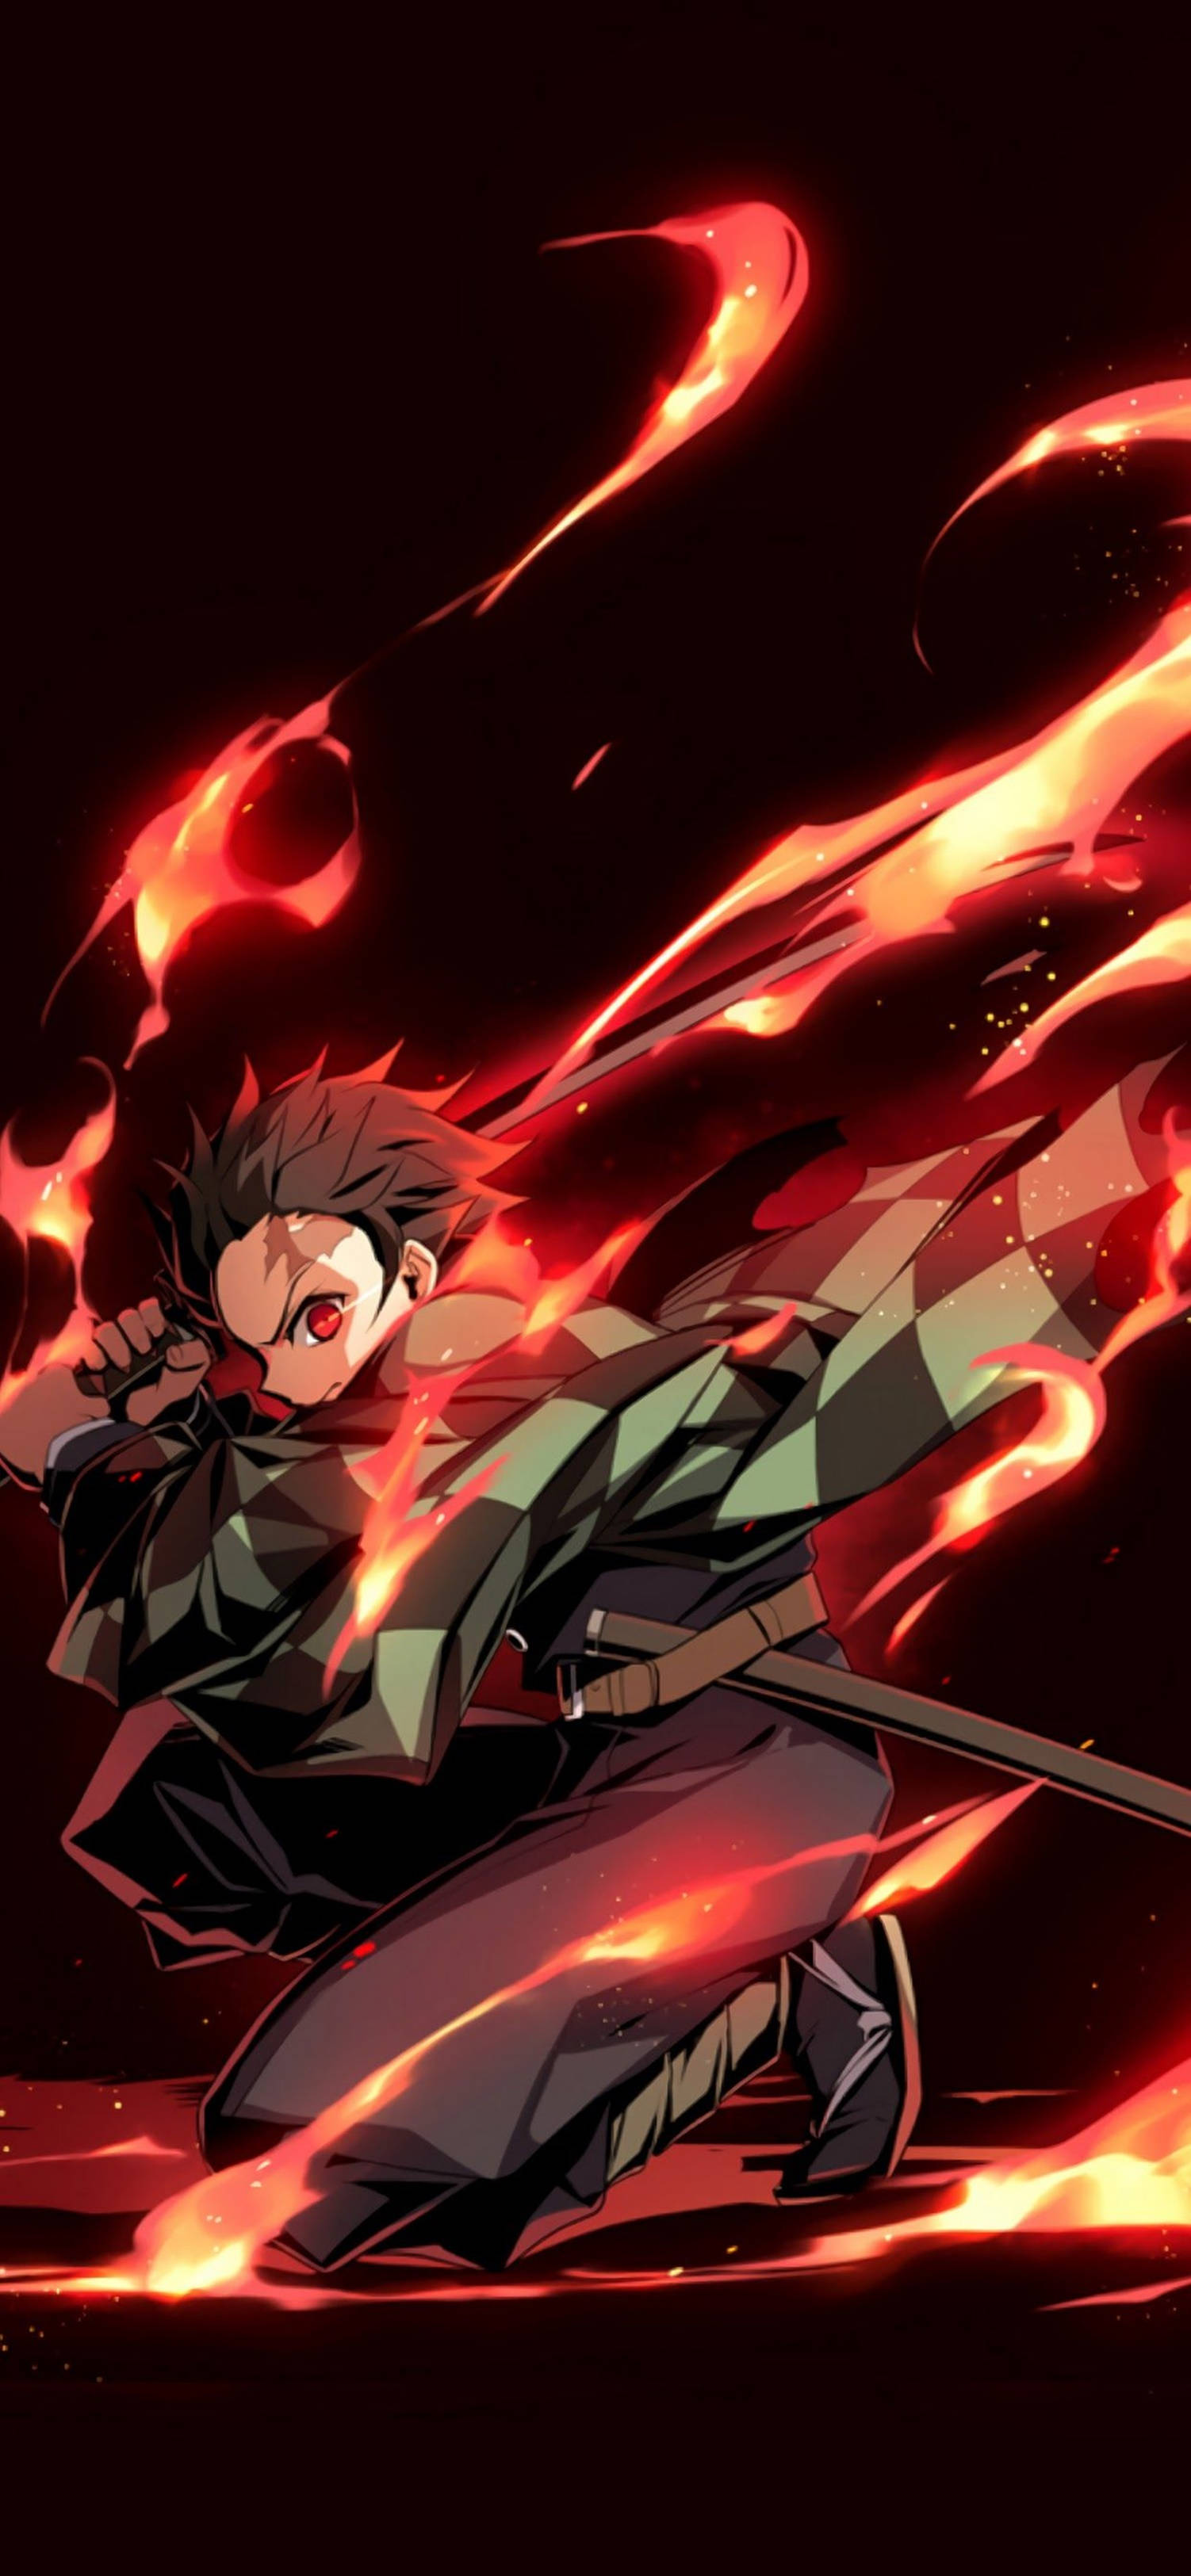 Download 4k Anime Iphone Demon Slayer Fire God Dance Wallpaper | Wallpapers .com